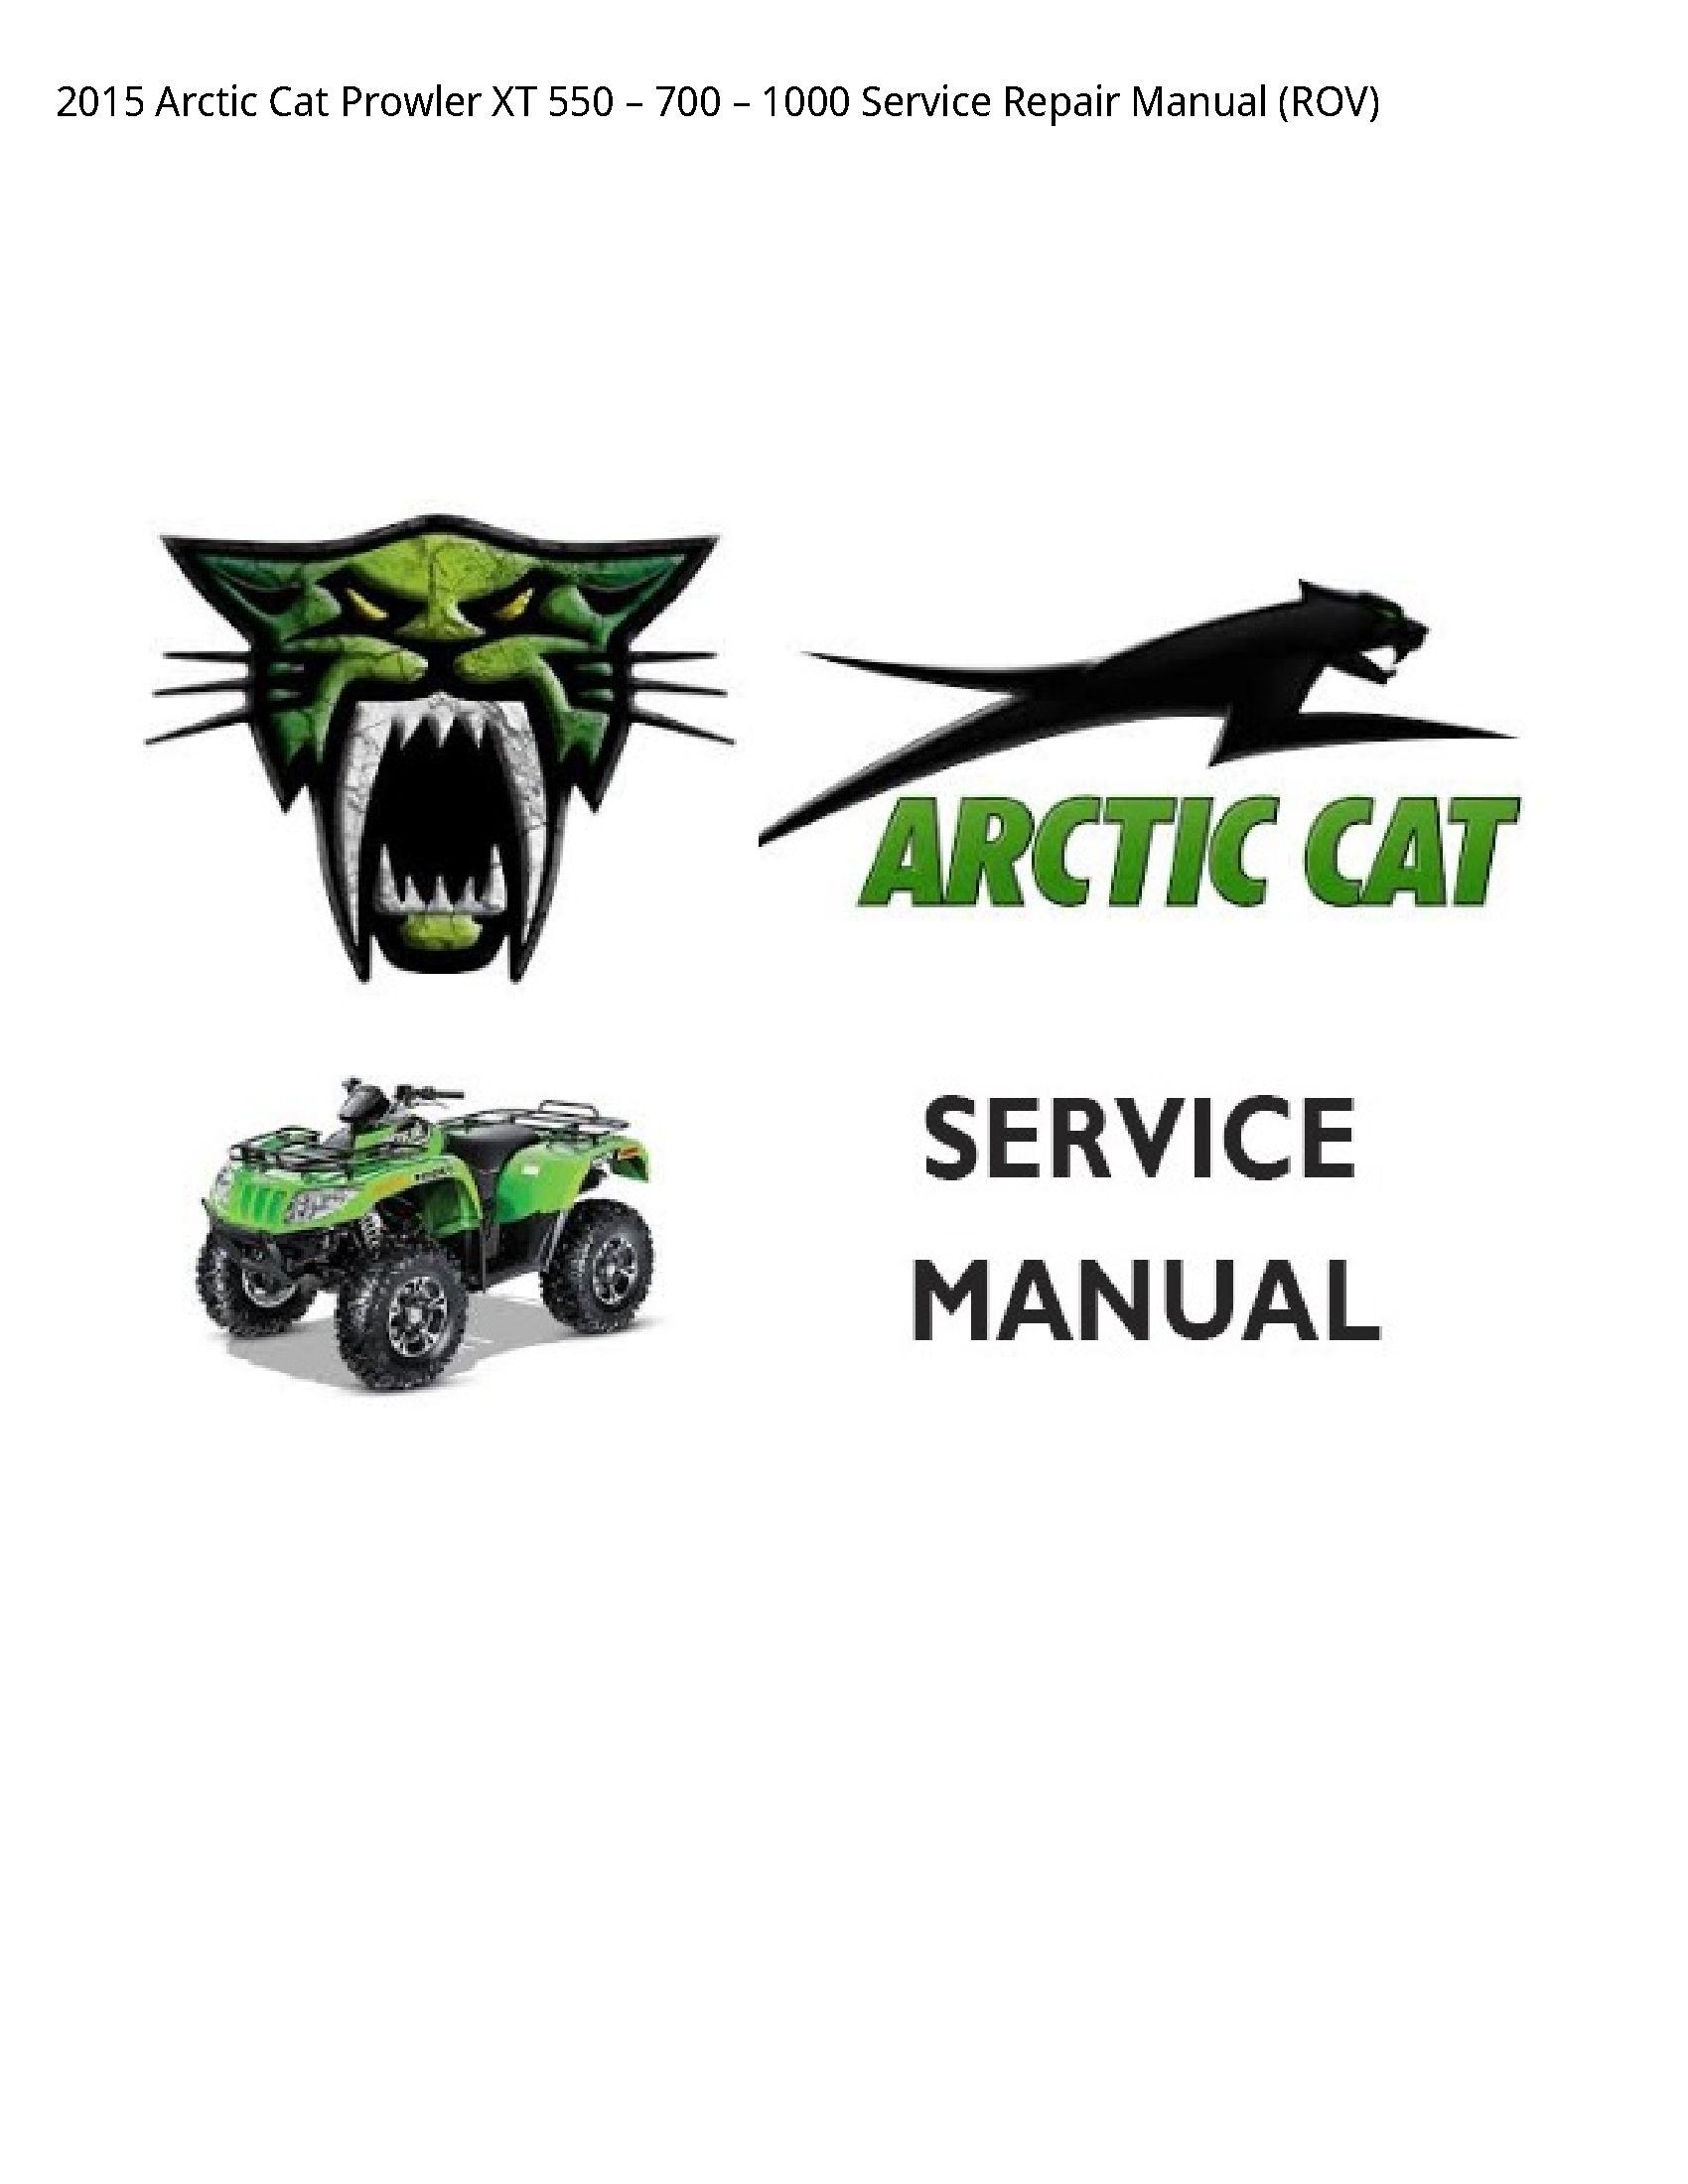 Arctic Cat 550 Prowler XT manual